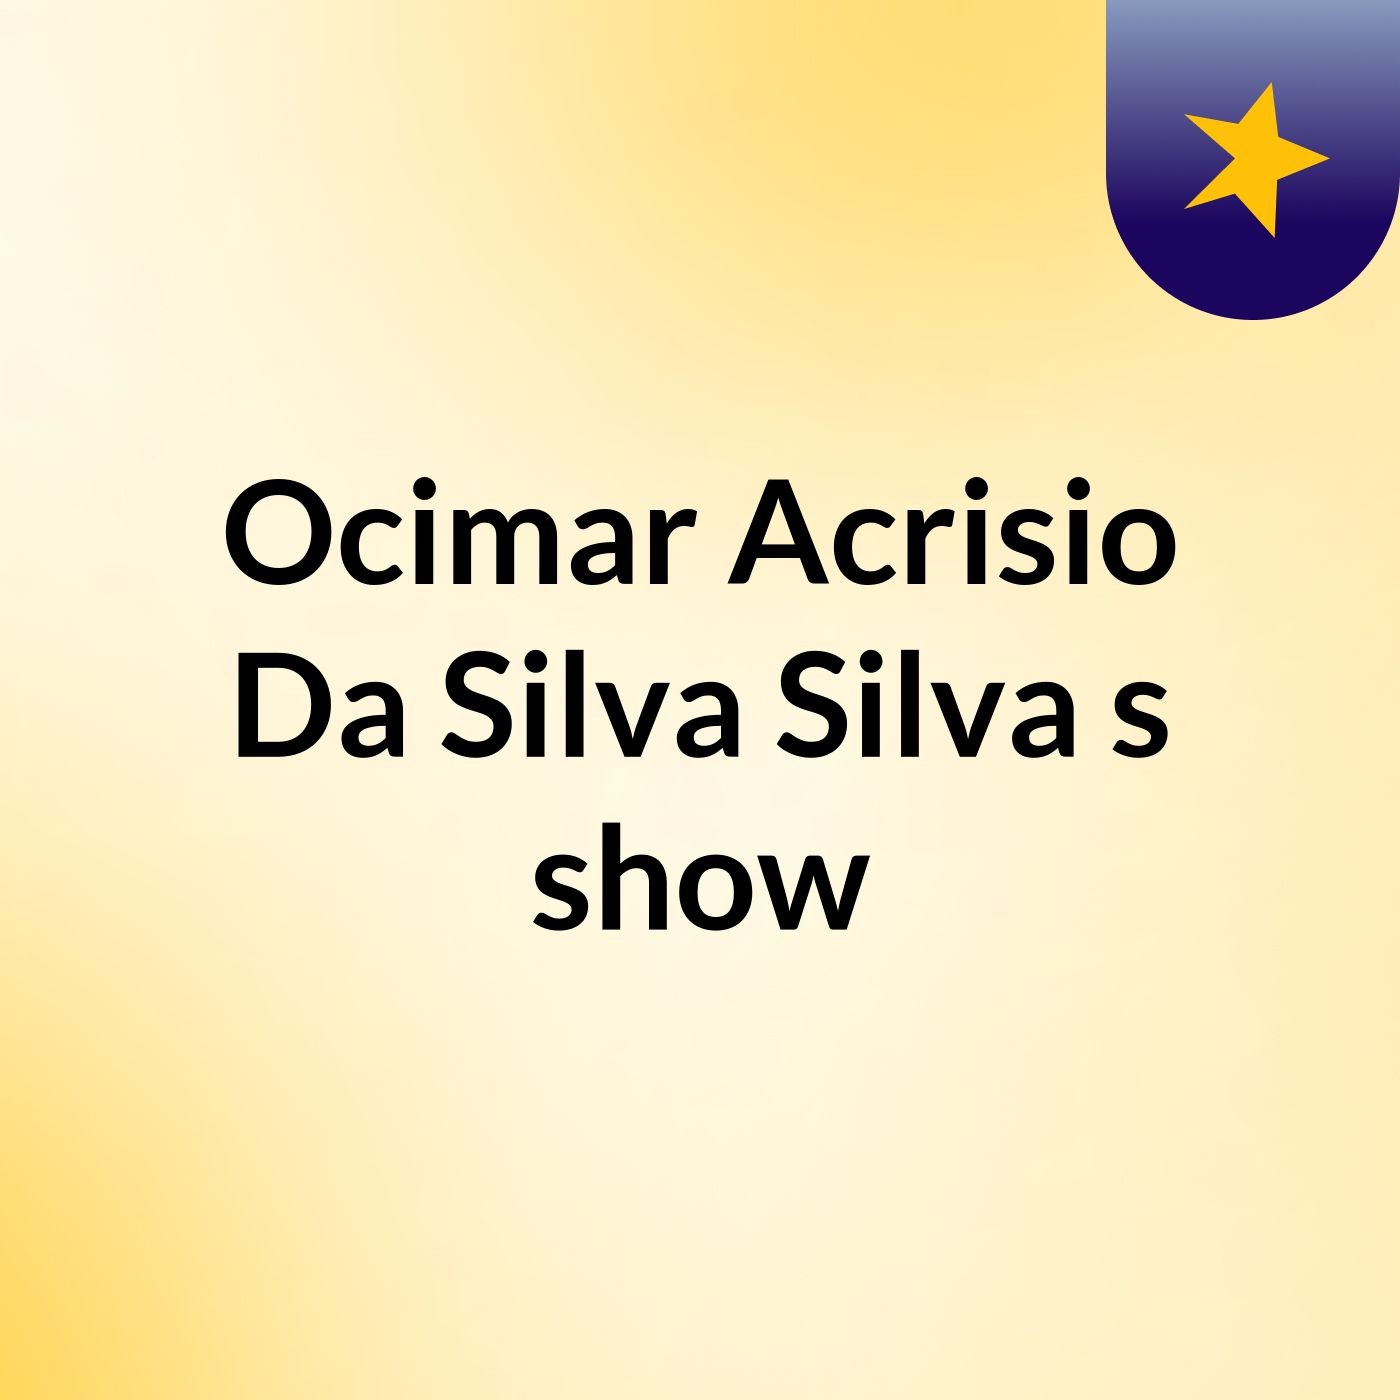 Ocimar Acrisio Da Silva Silva's show